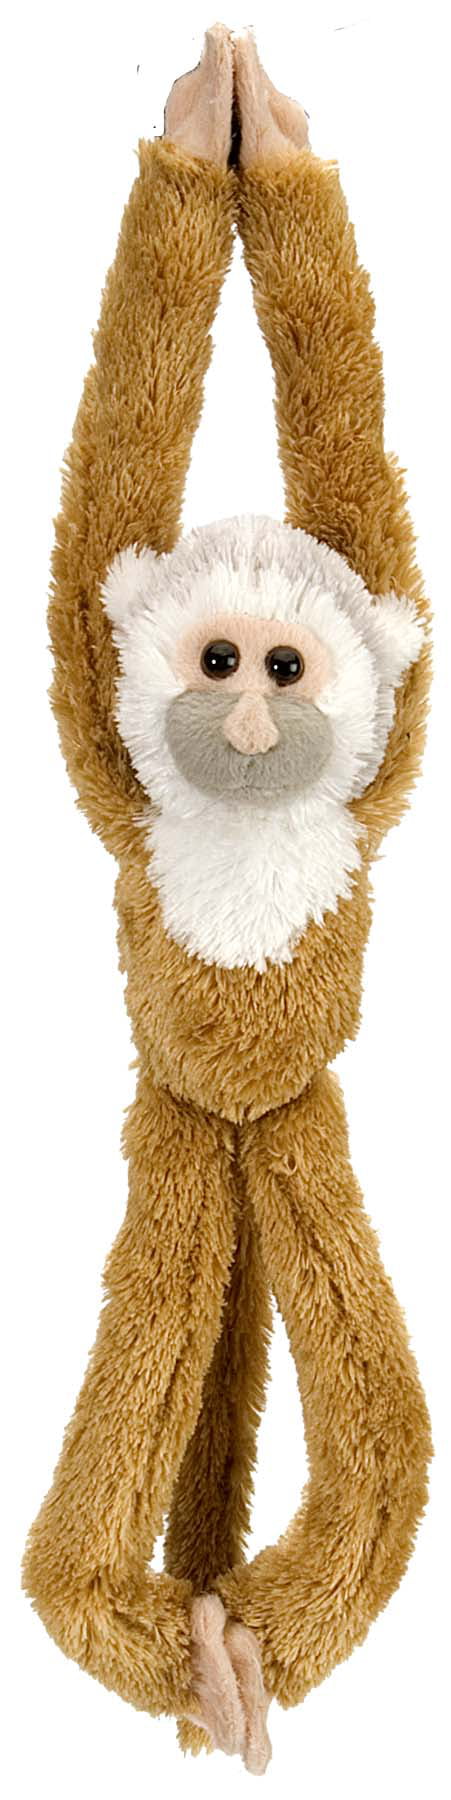 Cuddlekins 8 Inches Plush Toy Stuffed Animal Wild Republic Squirrel Monkey Plush Gifts for Kids 